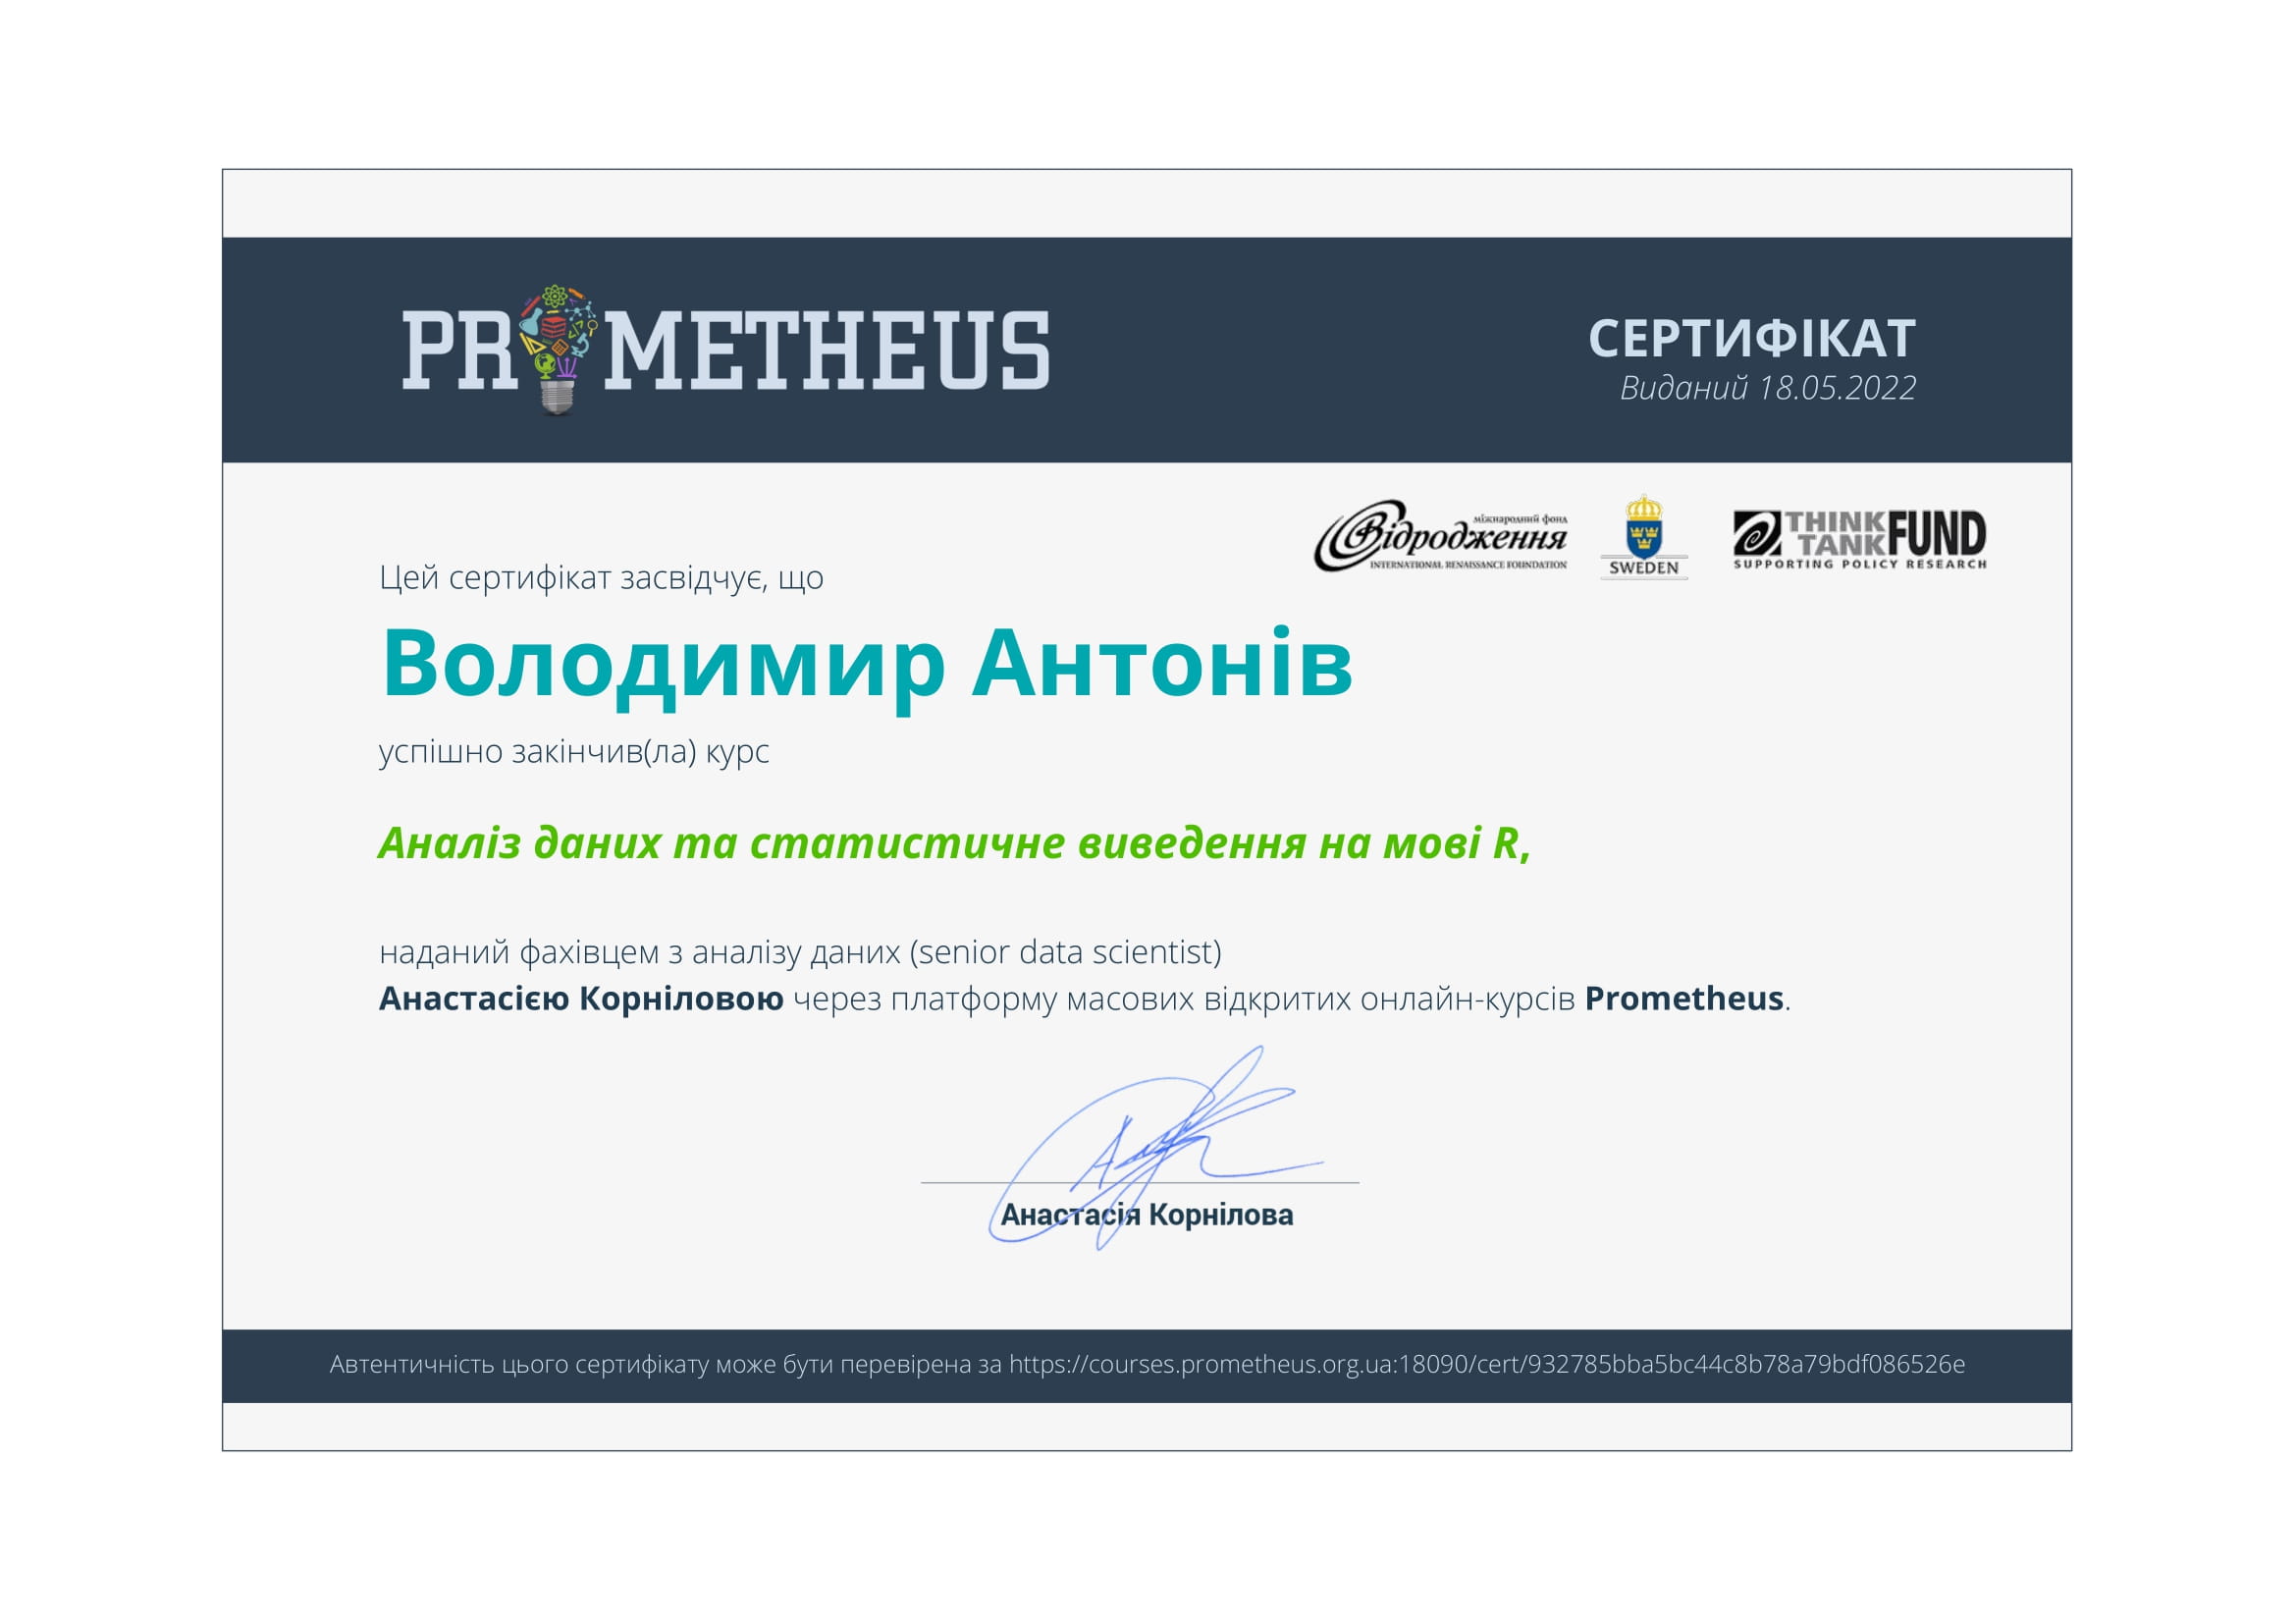 Certificate antoniv 1